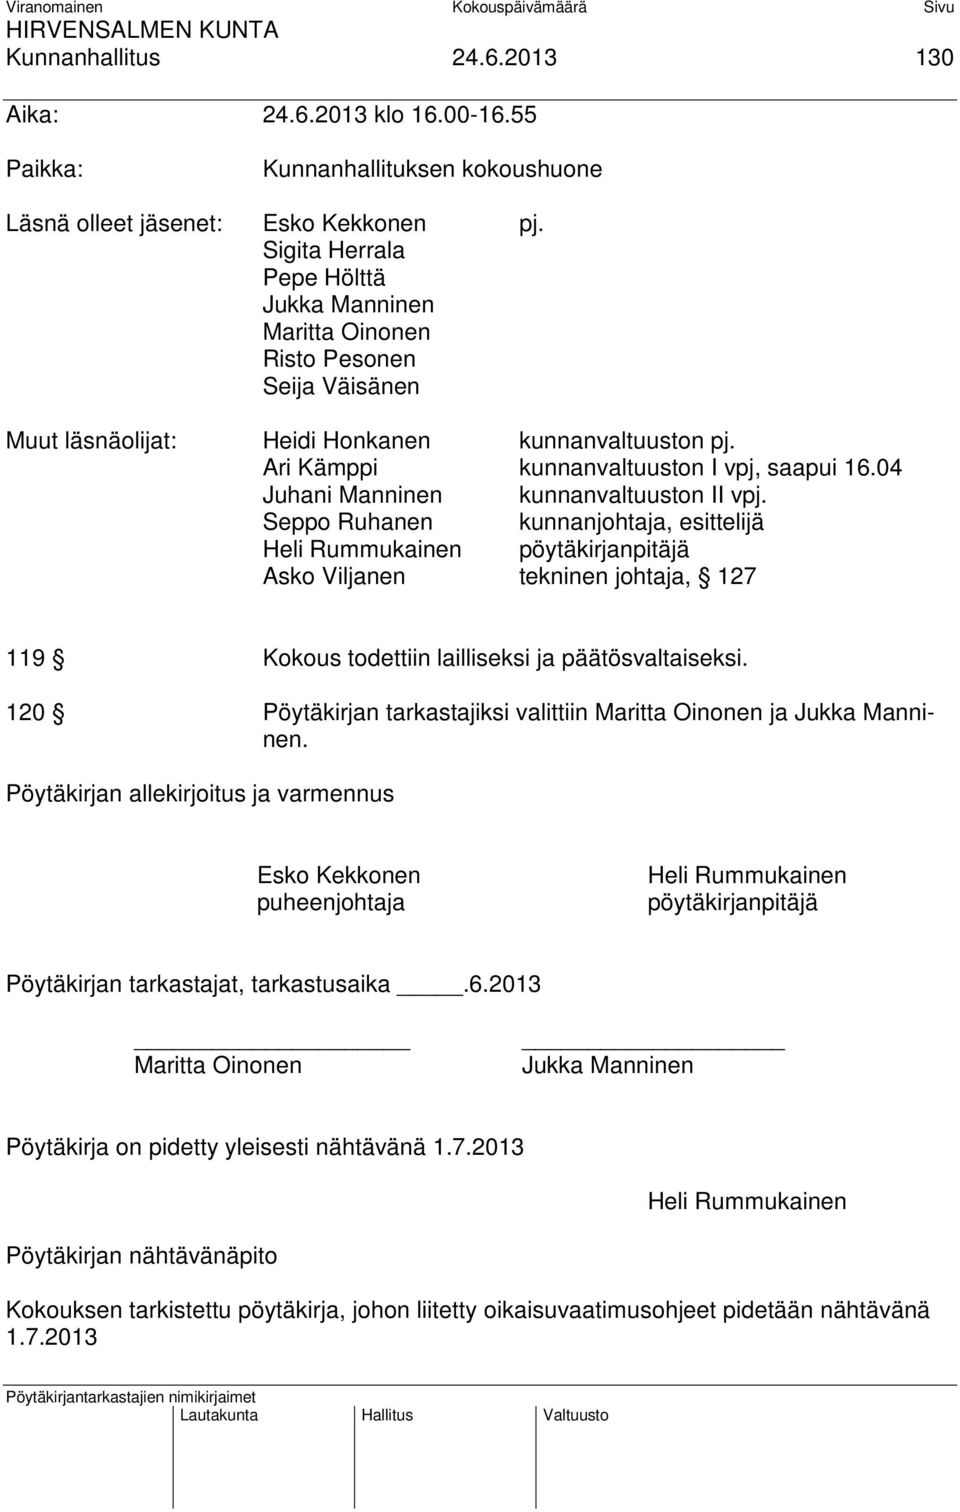 04 Juhani Manninen kunnanvaltuuston II vpj.